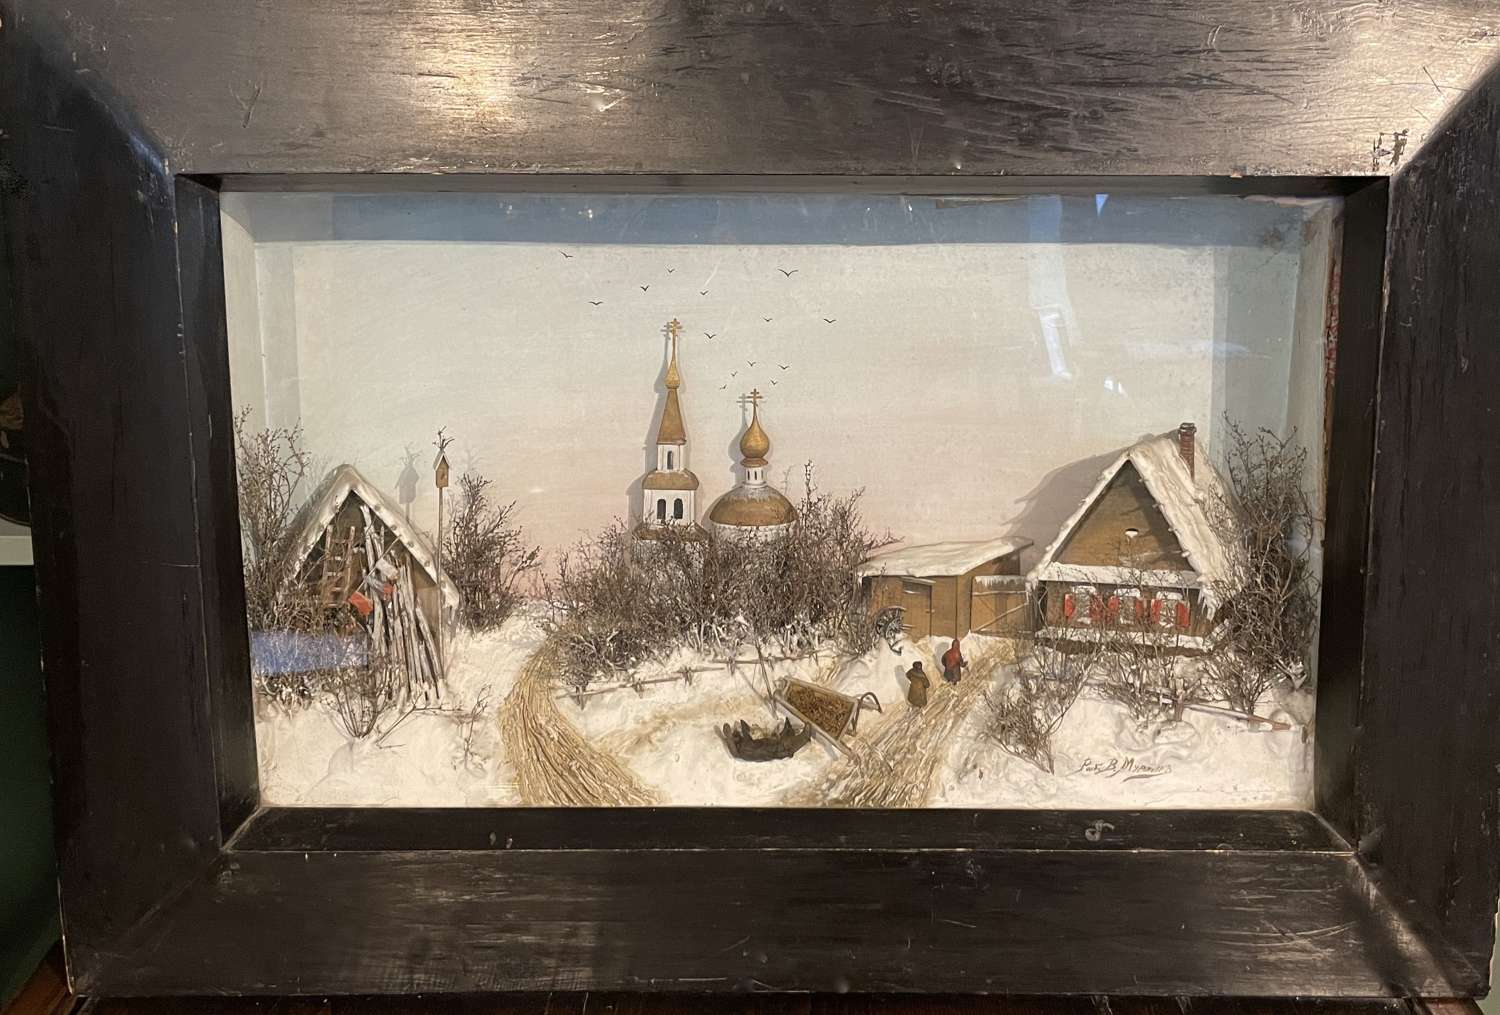 19th Century Russian Diorama of a Snowy Landscape